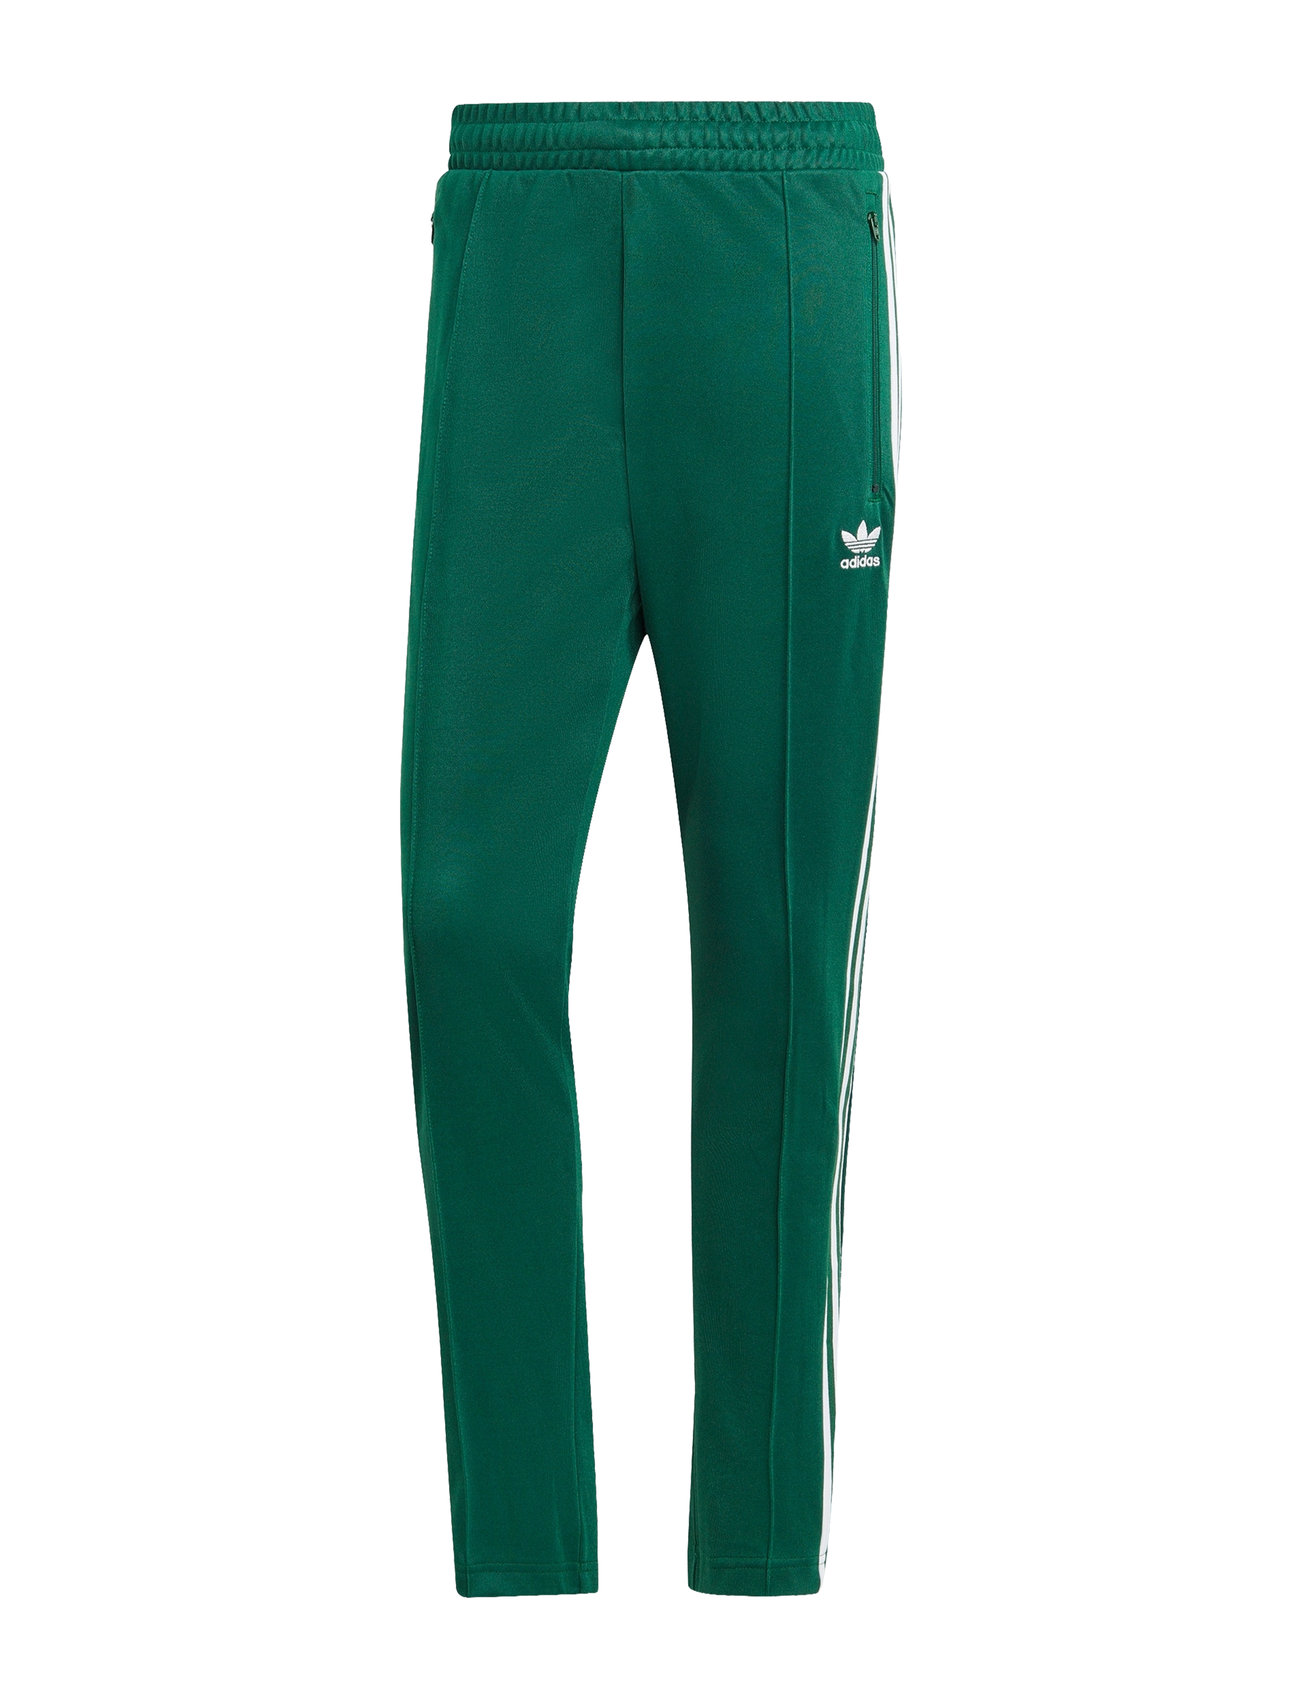 Adicolor Classics Beckenbauer Tracksuit Bottoms Green Adidas Originals